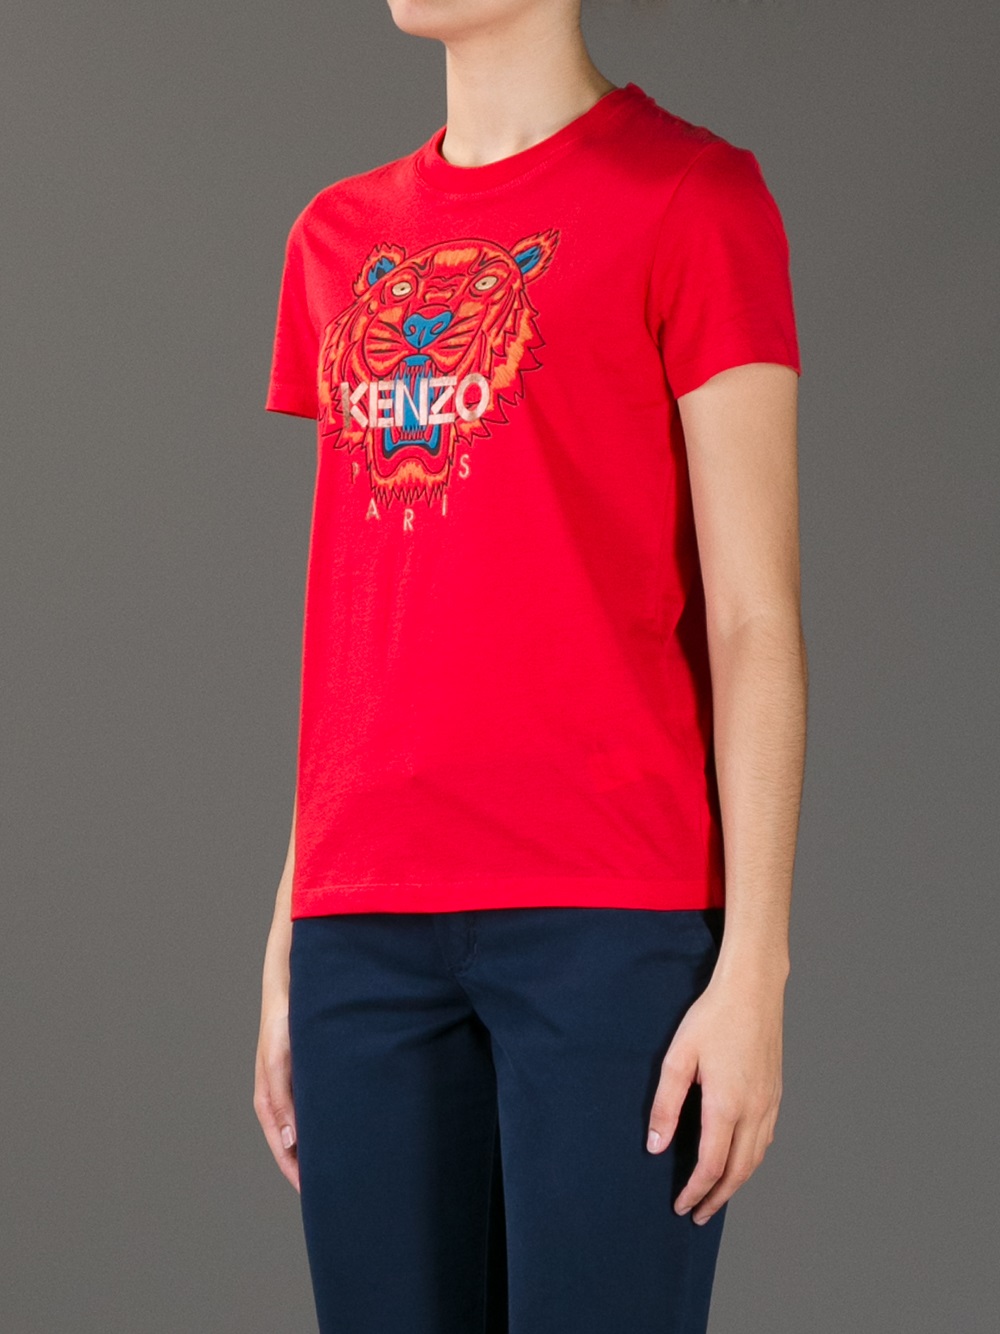 red kenzo t shirt women's